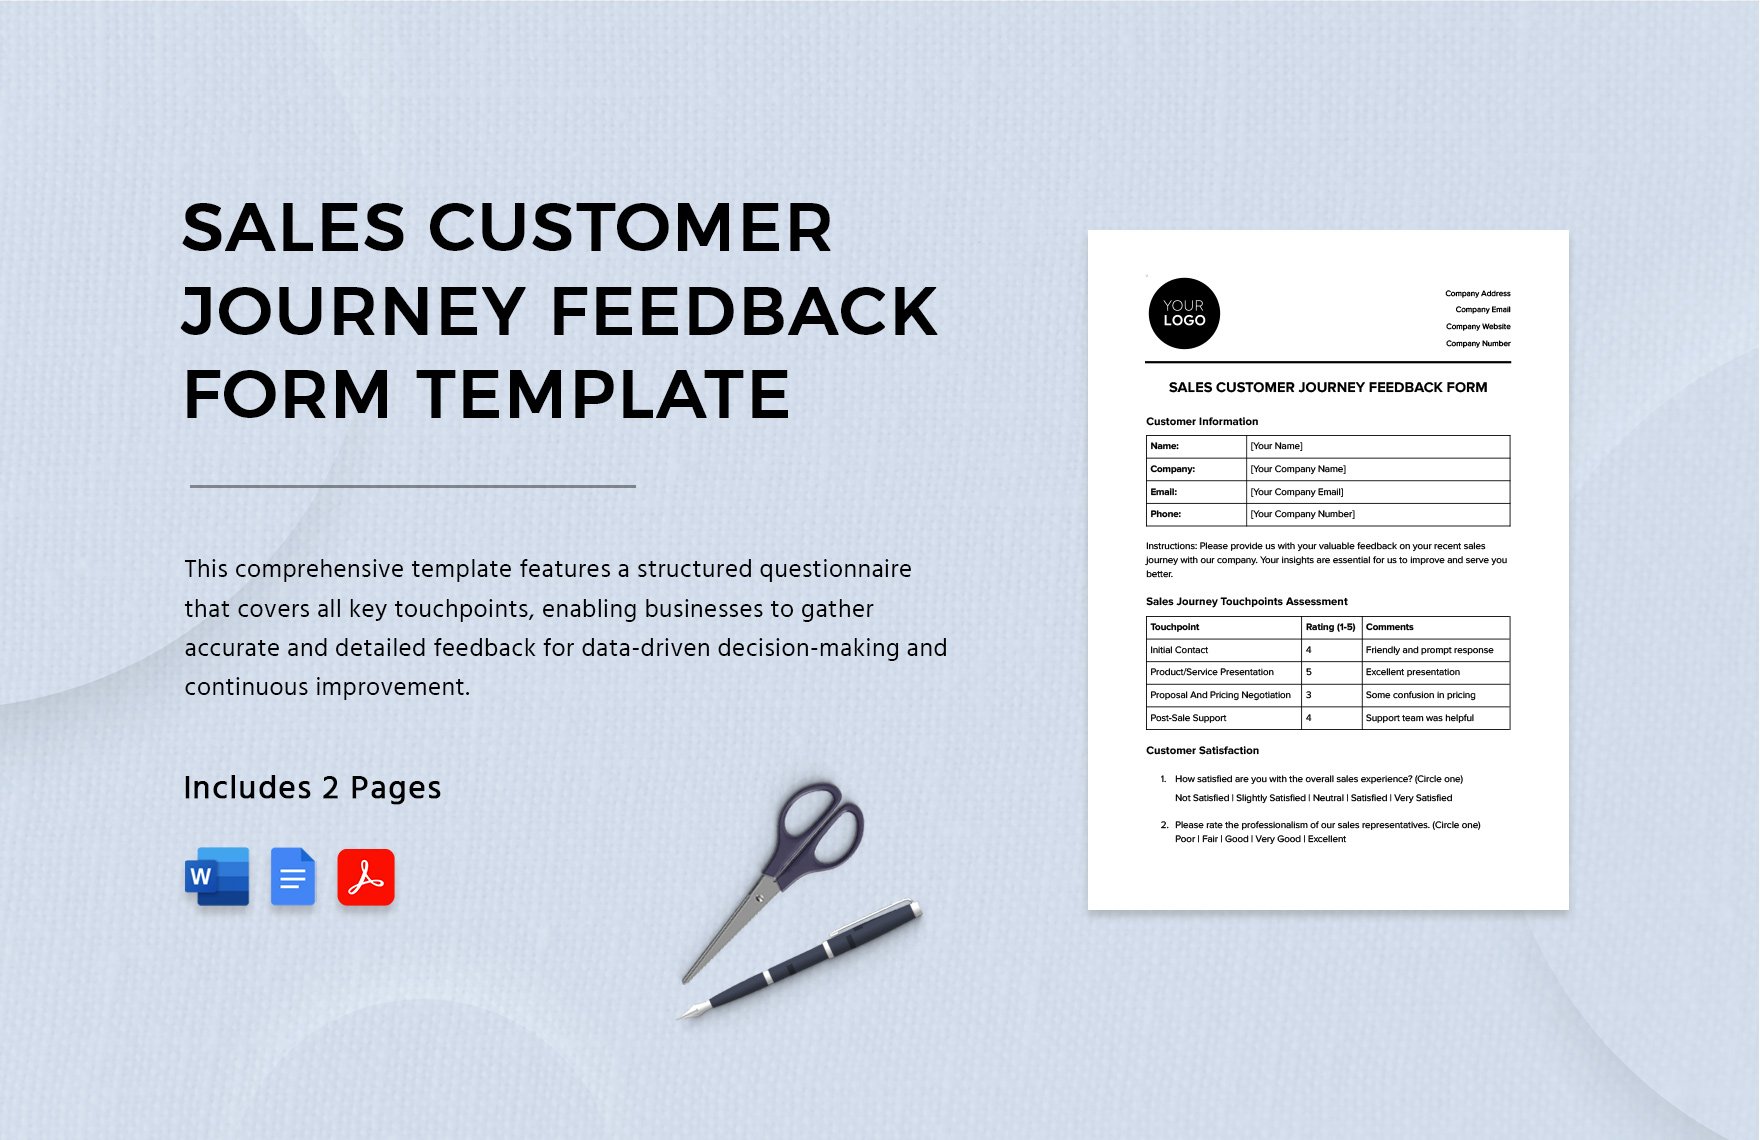 Sales Customer Journey Feedback Form Template in Word, Google Docs, PDF